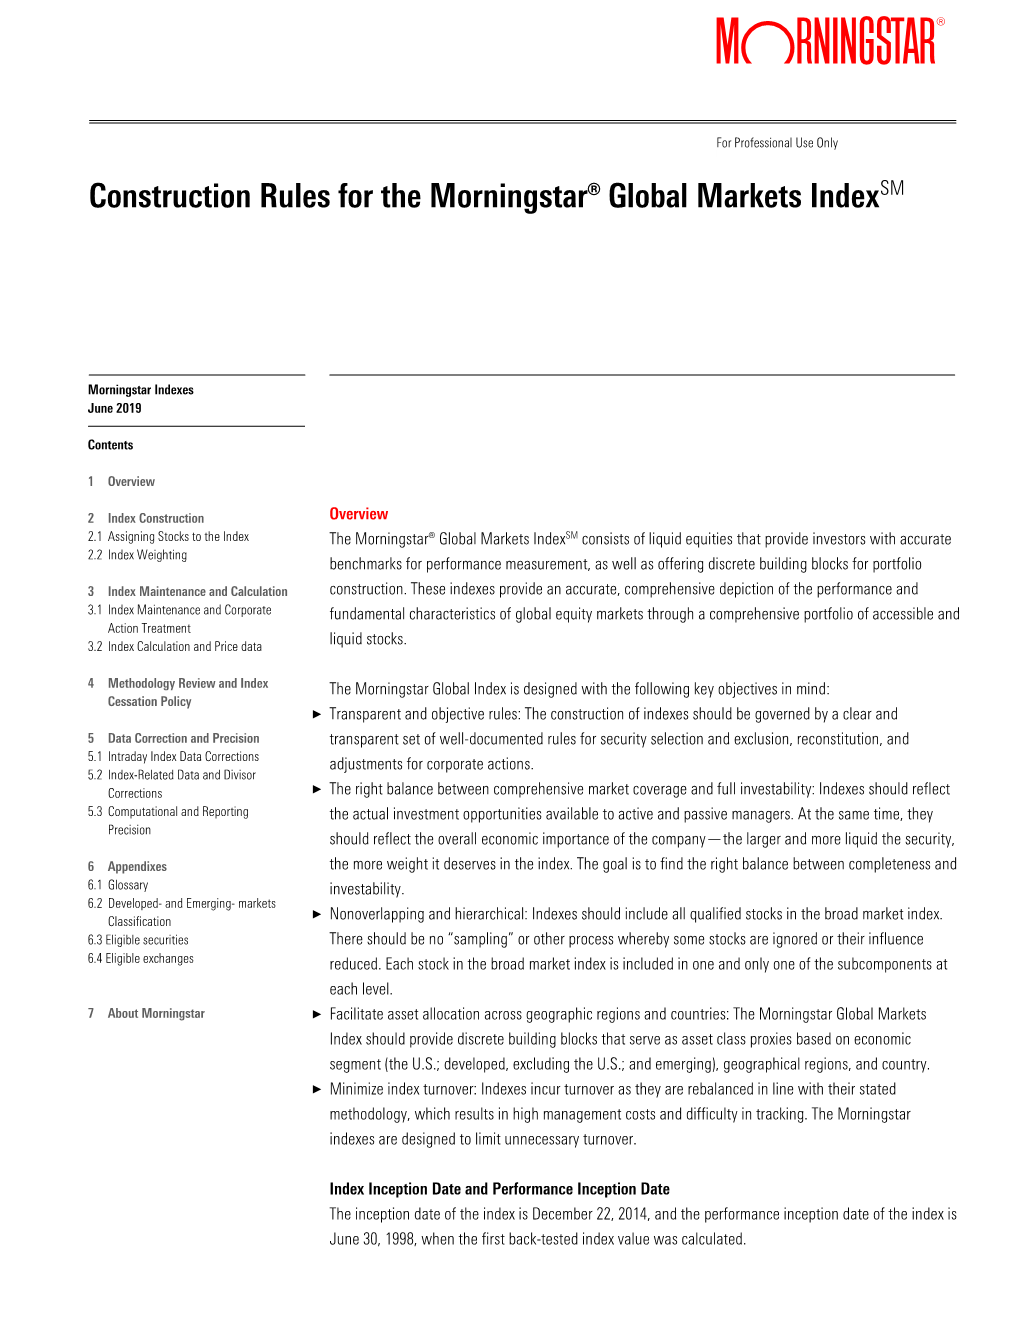 Construction Rules for the Morningstar® Global Markets Indexsm